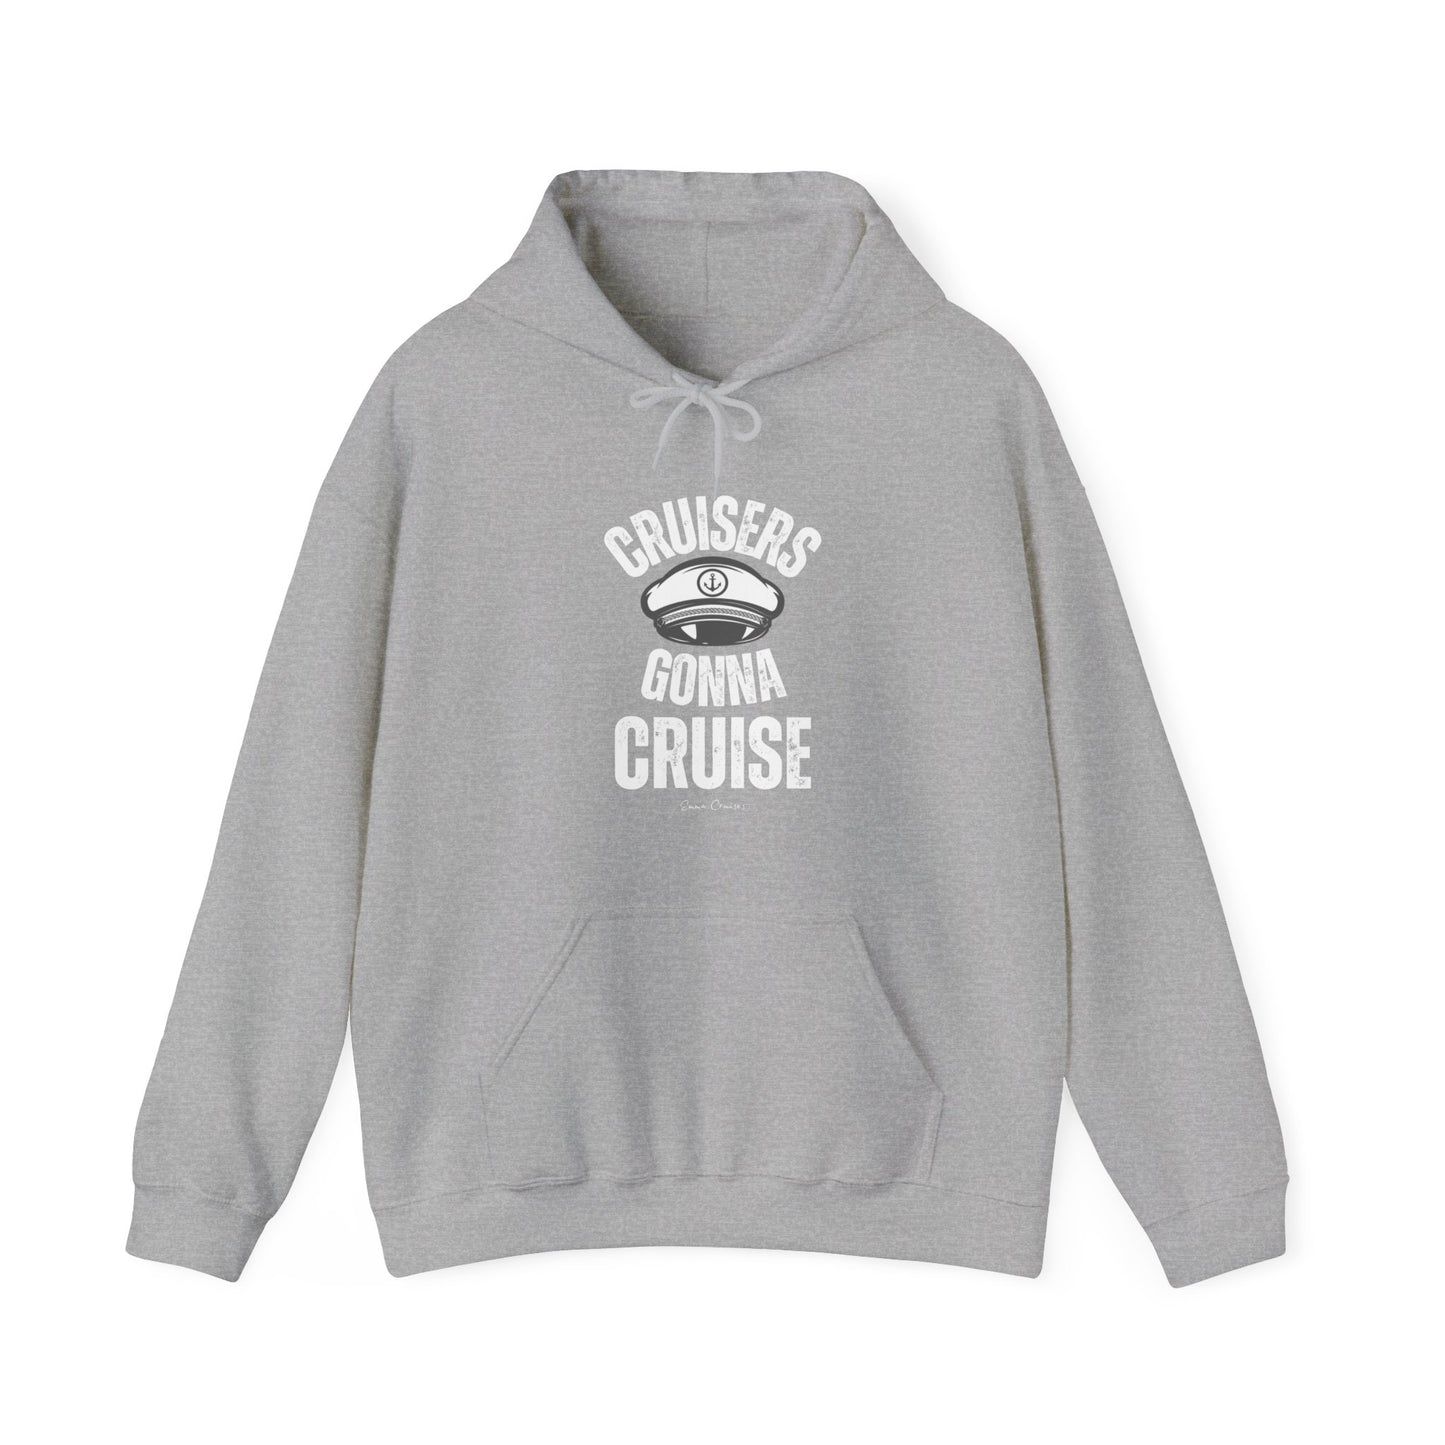 Cruisers Gonna Cruise - UNISEX Hoodie